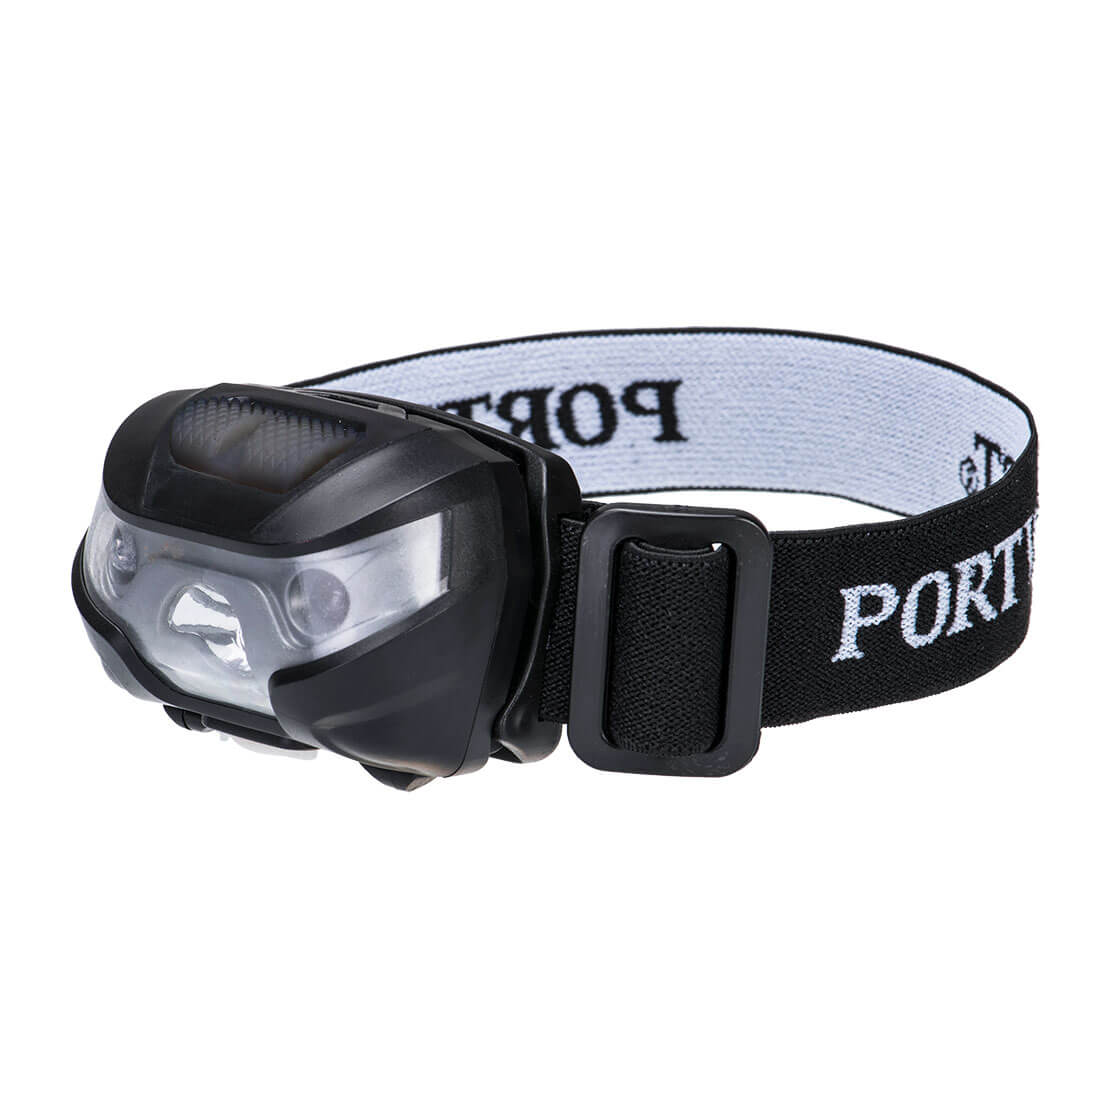 Portwest Super Bright Rechargeable180° Head LED USB Torch Work 100 Lumen Light Headlamp - Hamtons Direct